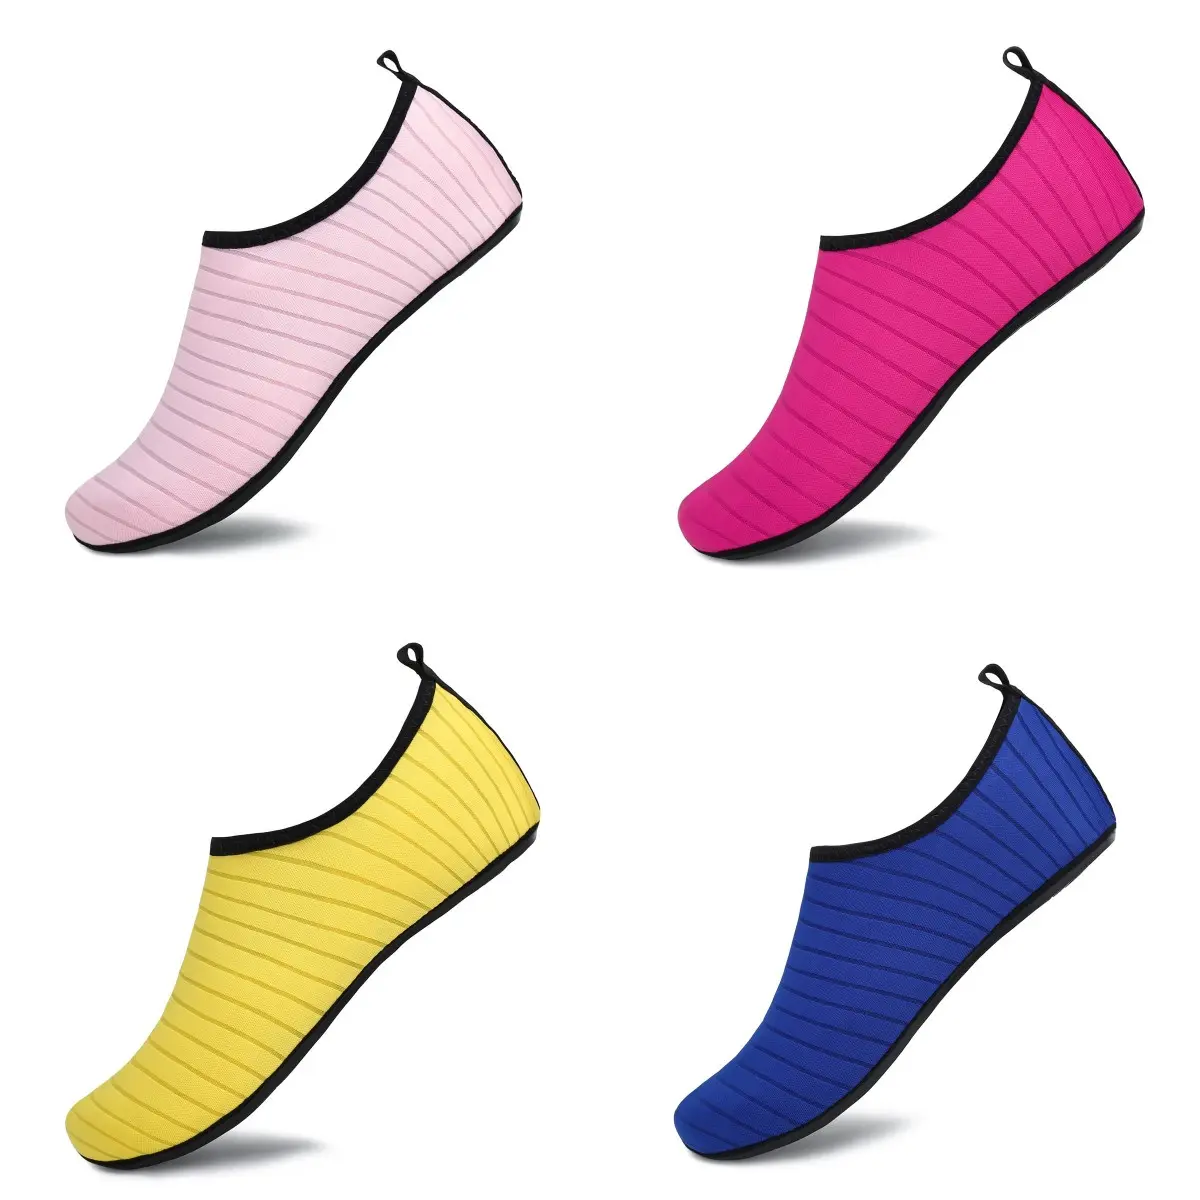 Water Sports Shoes Barefoot Quick-Dry Aqua Yoga Socks Slip-on for Men Women